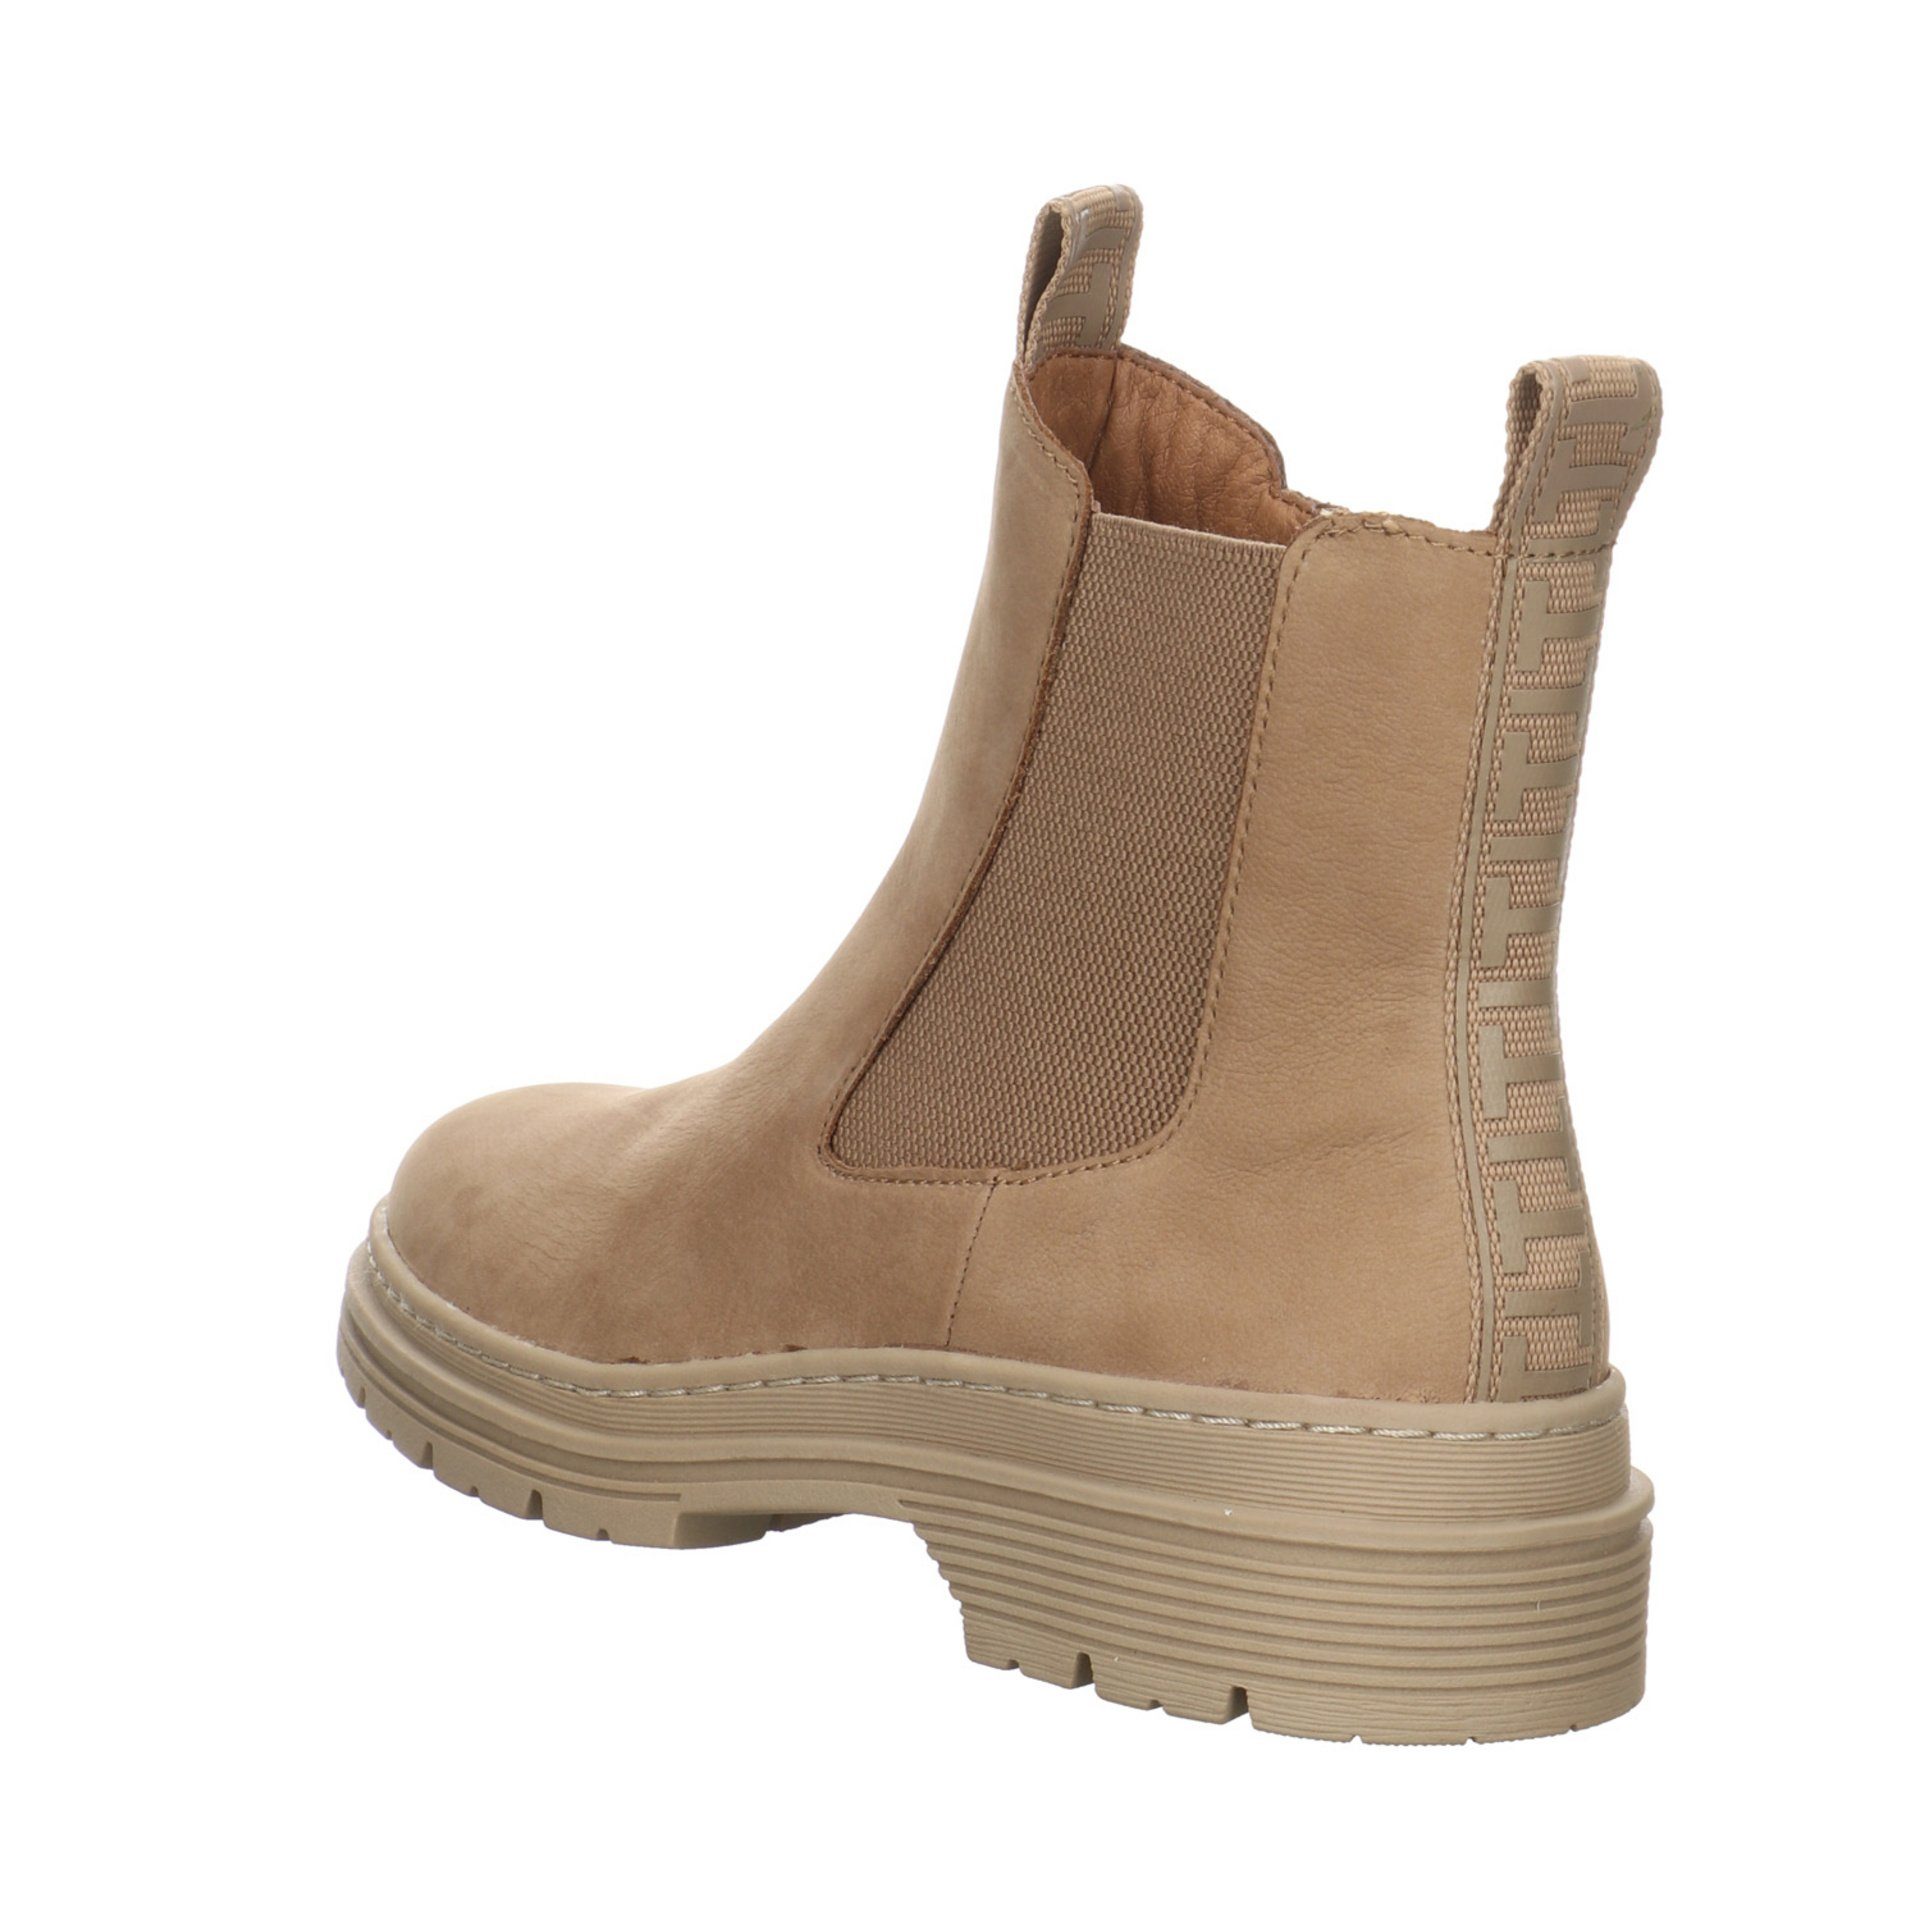 Tamaris Damen Stiefeletten Schuhe Chelsea Stiefelette Leder-/Textilkombination Camel Boots